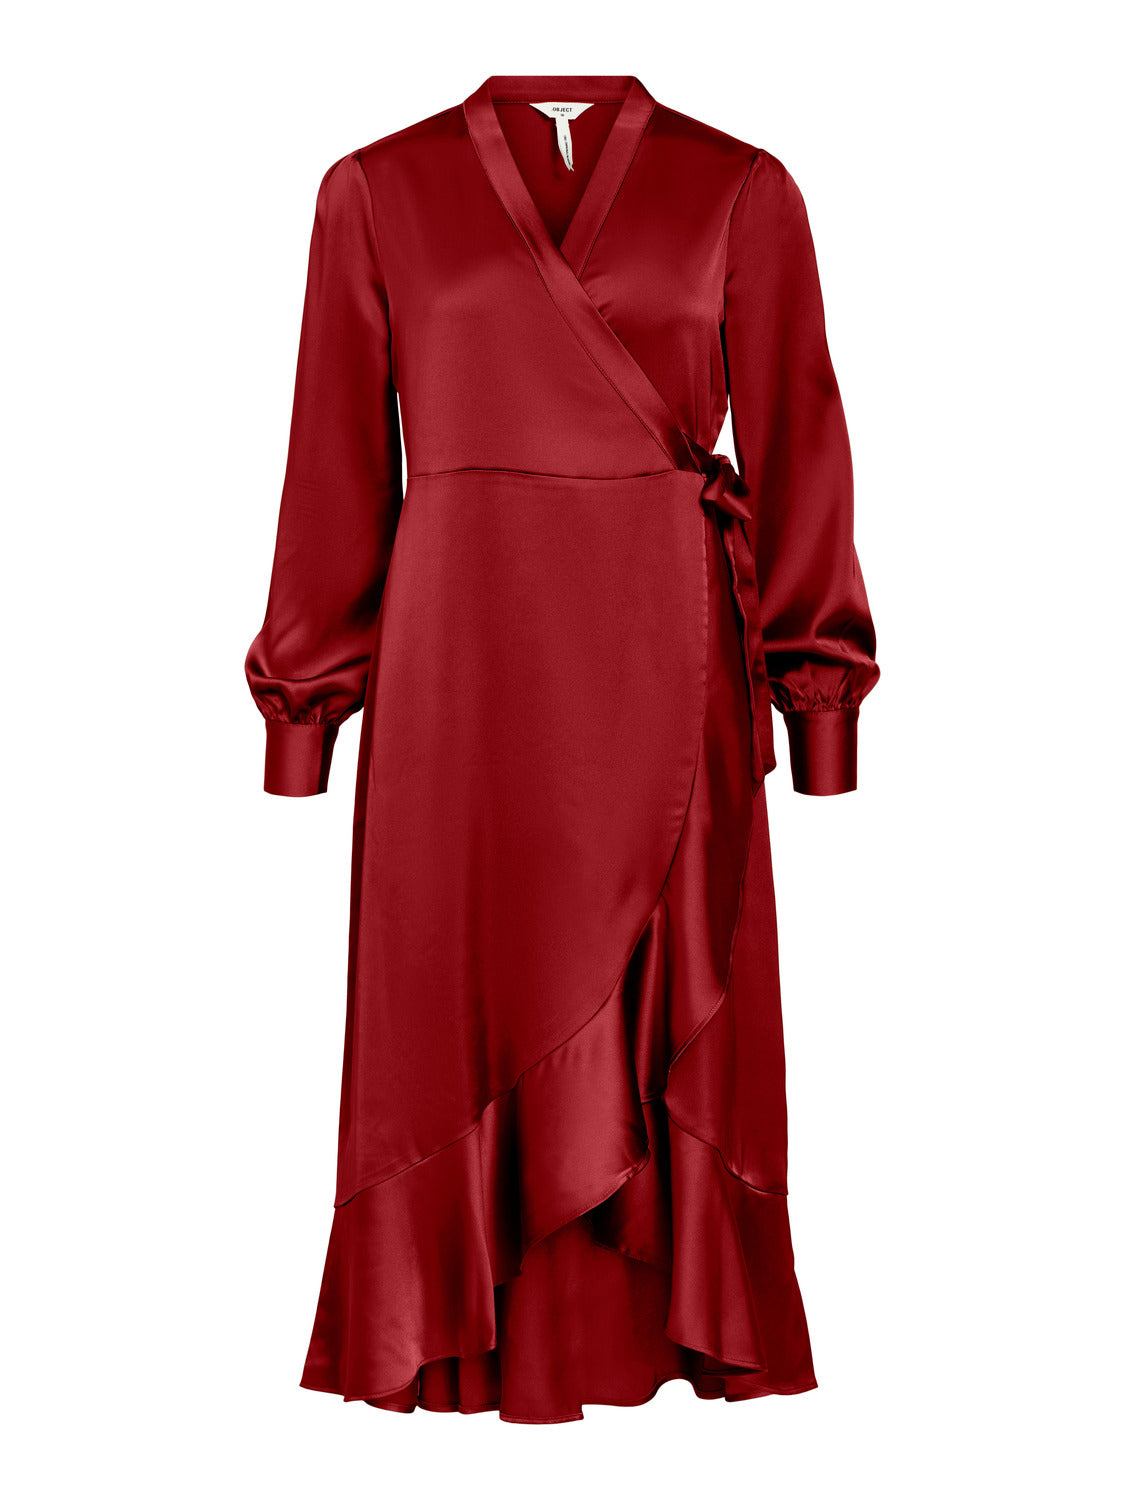 OBJSATEEN Dress - Red Dahlia